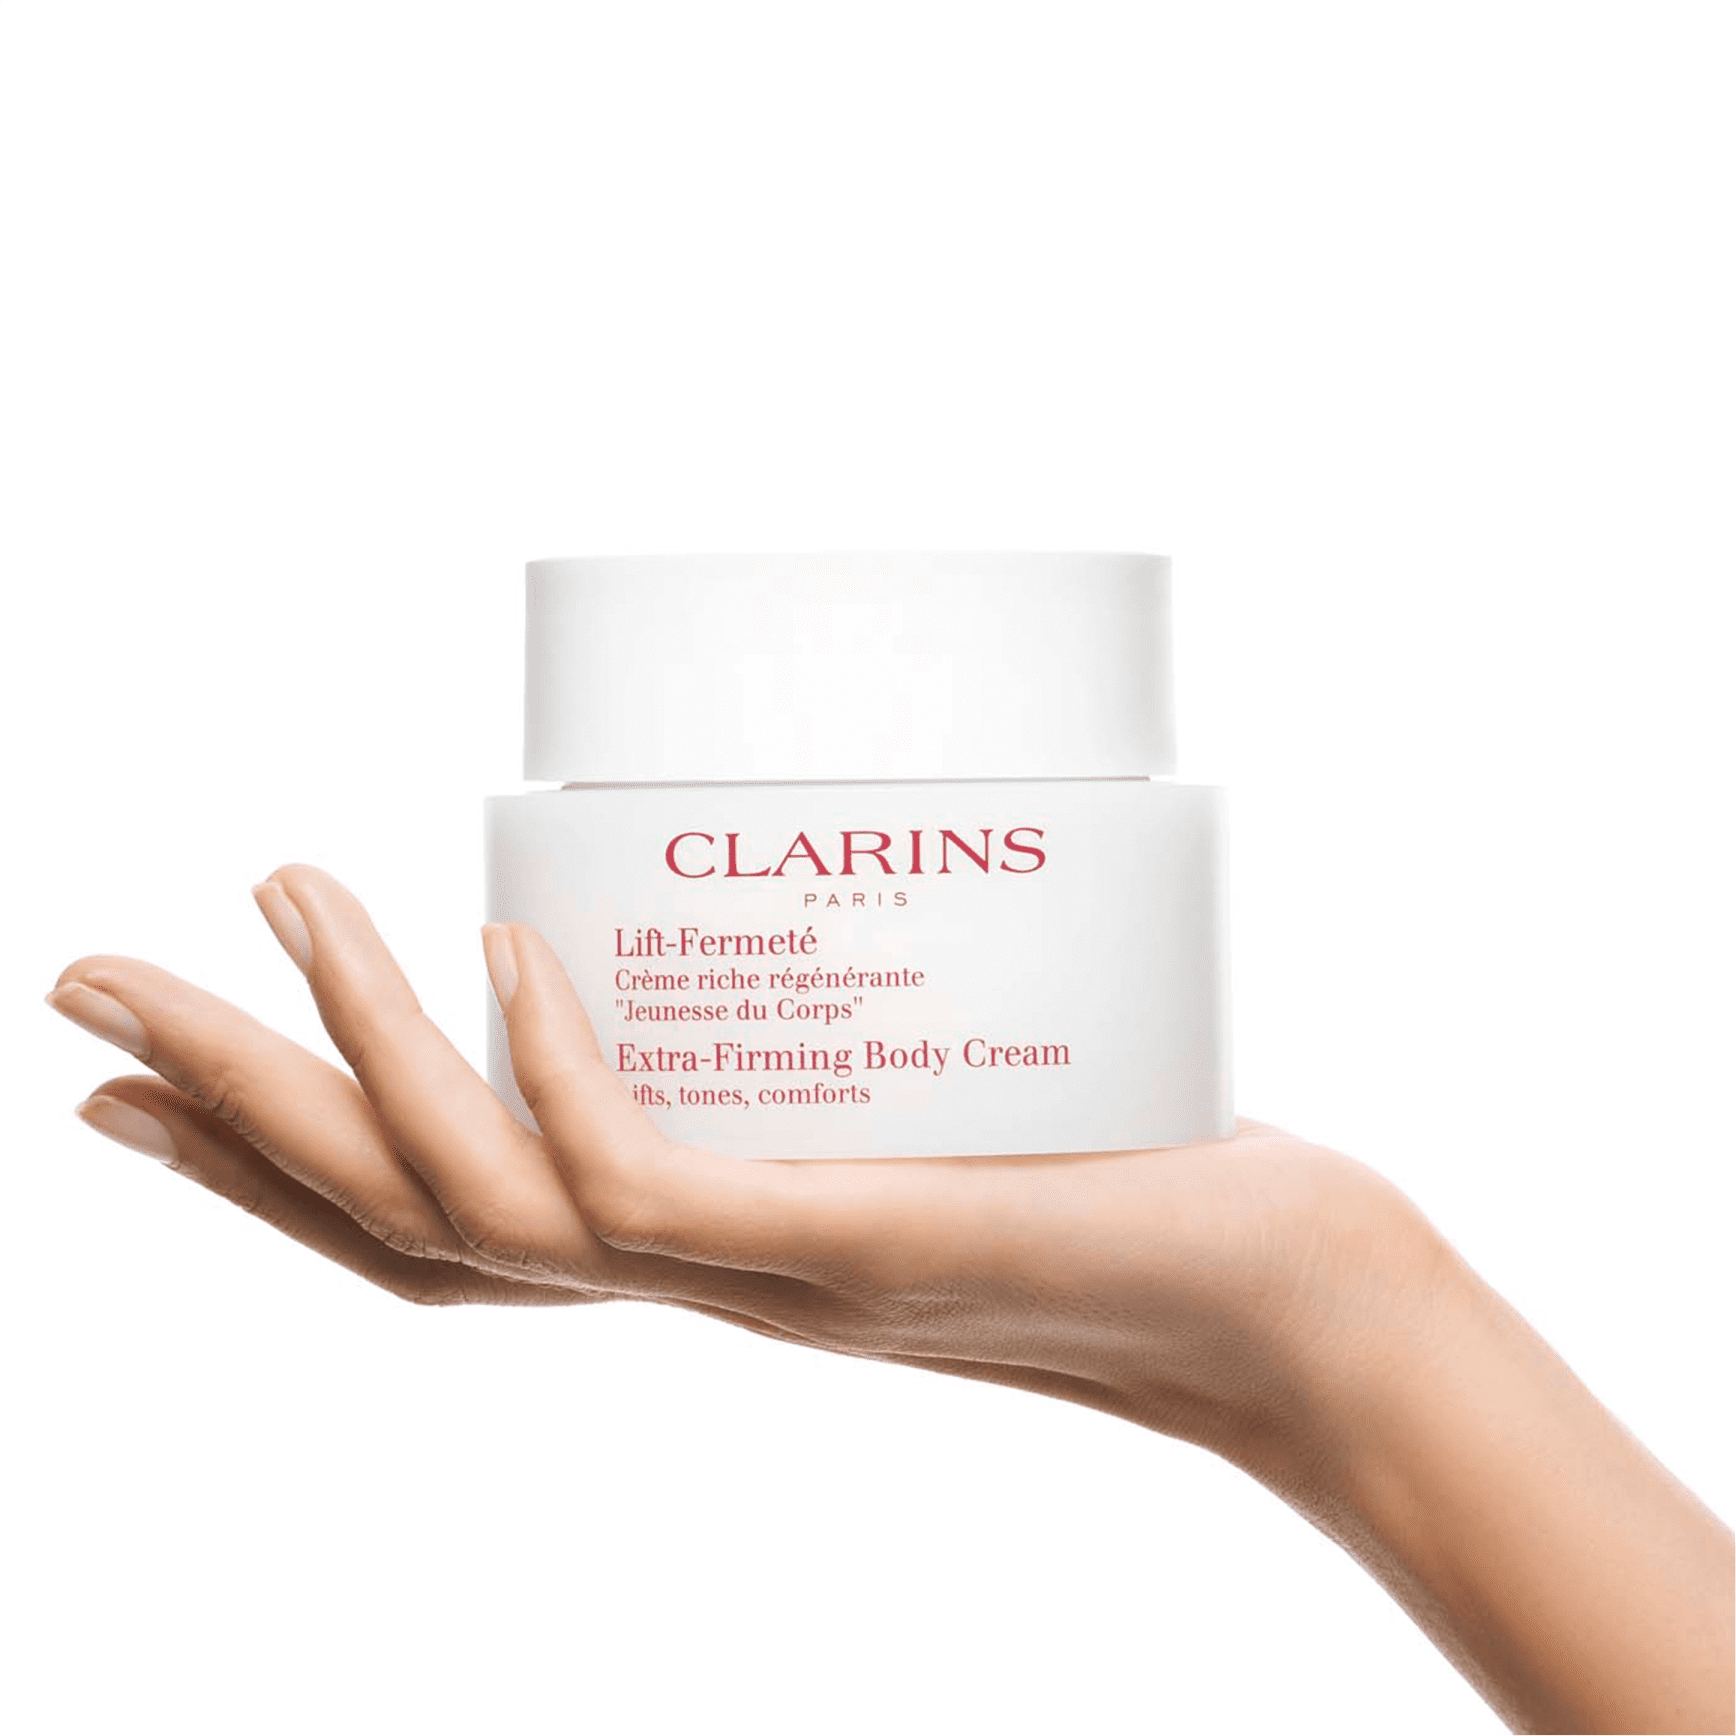  Clarins Extra-Firming Body Cream